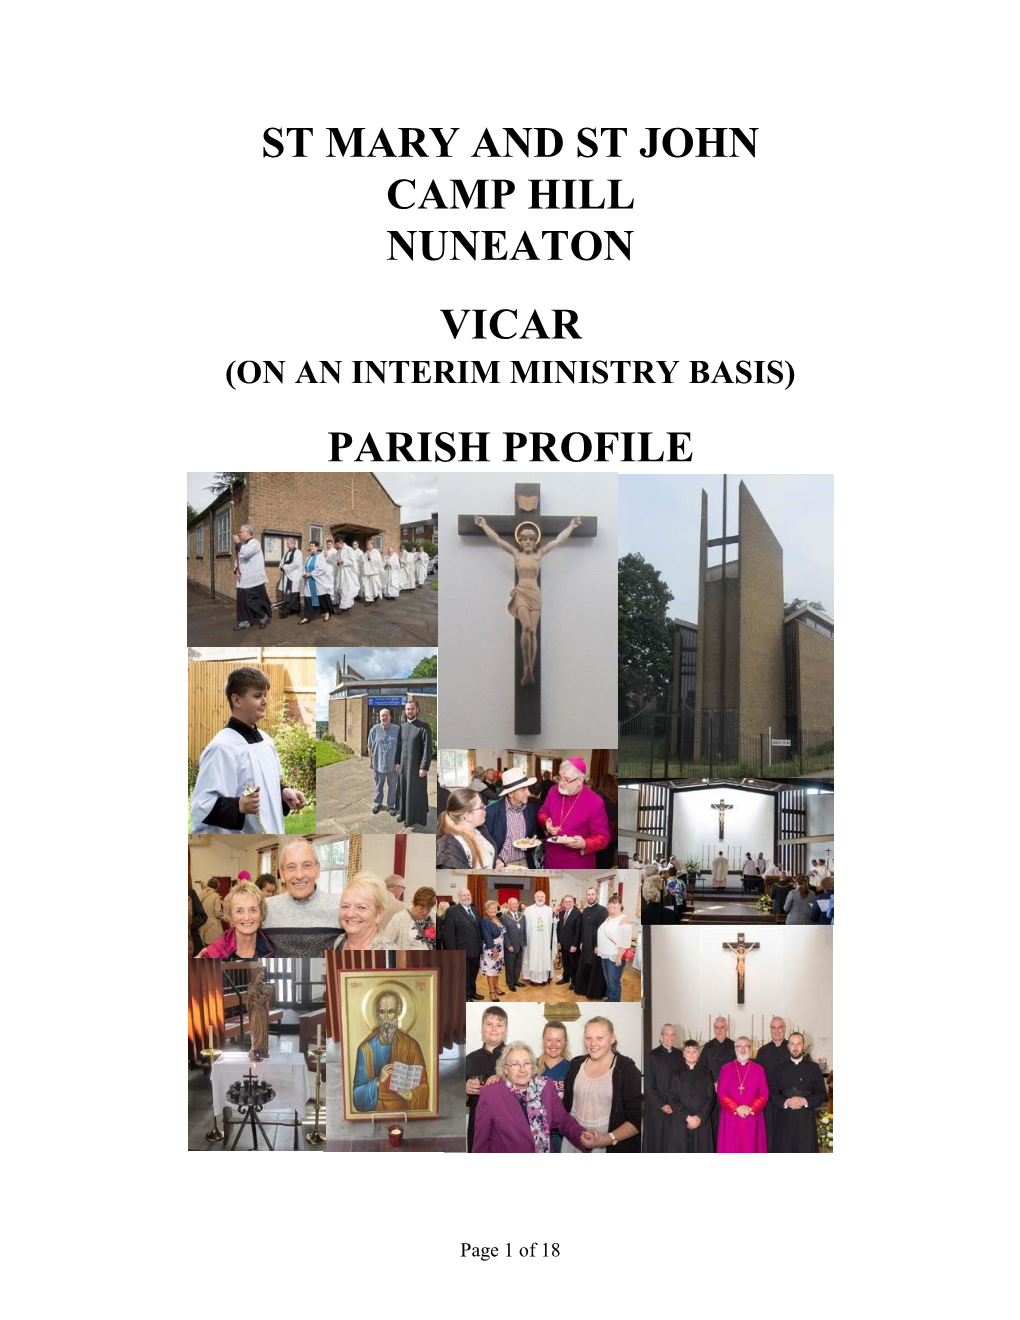 St Mary and St John Camp Hill Nuneaton Vicar Parish Profile